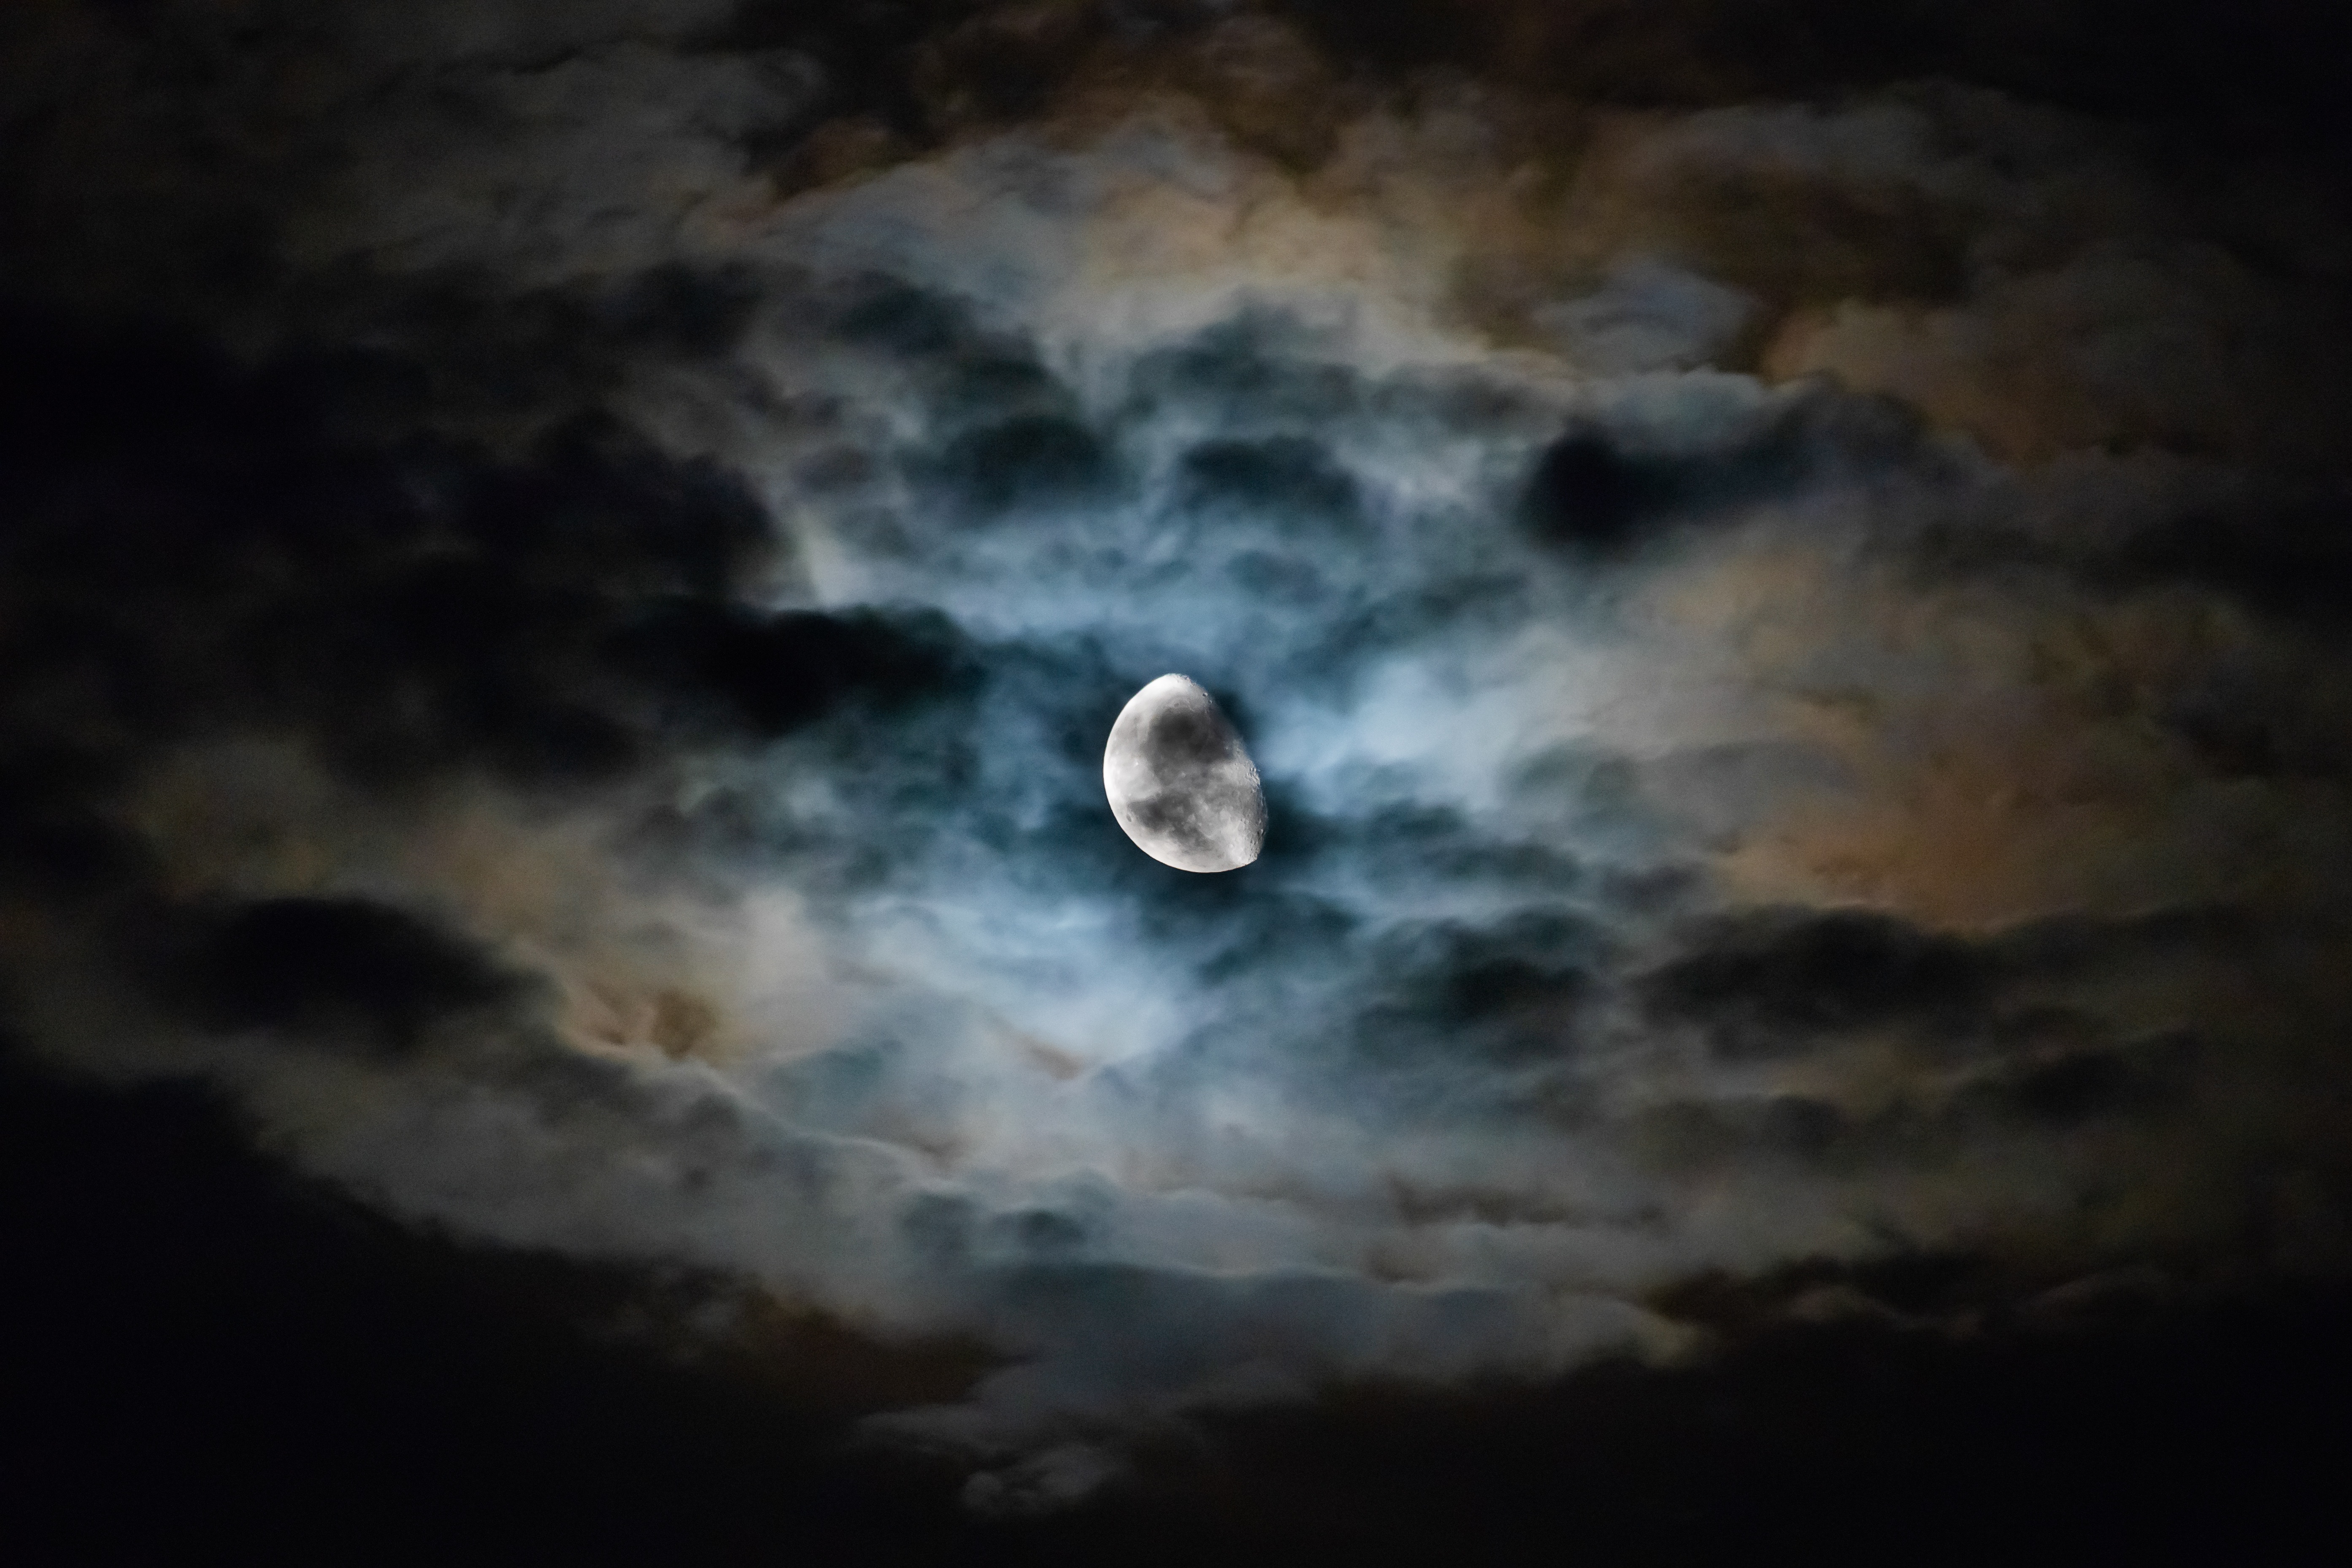 Небе погаснет луна. Луна на небе. Полная Луна. Лунная ночь. Ночное небо с тучами.